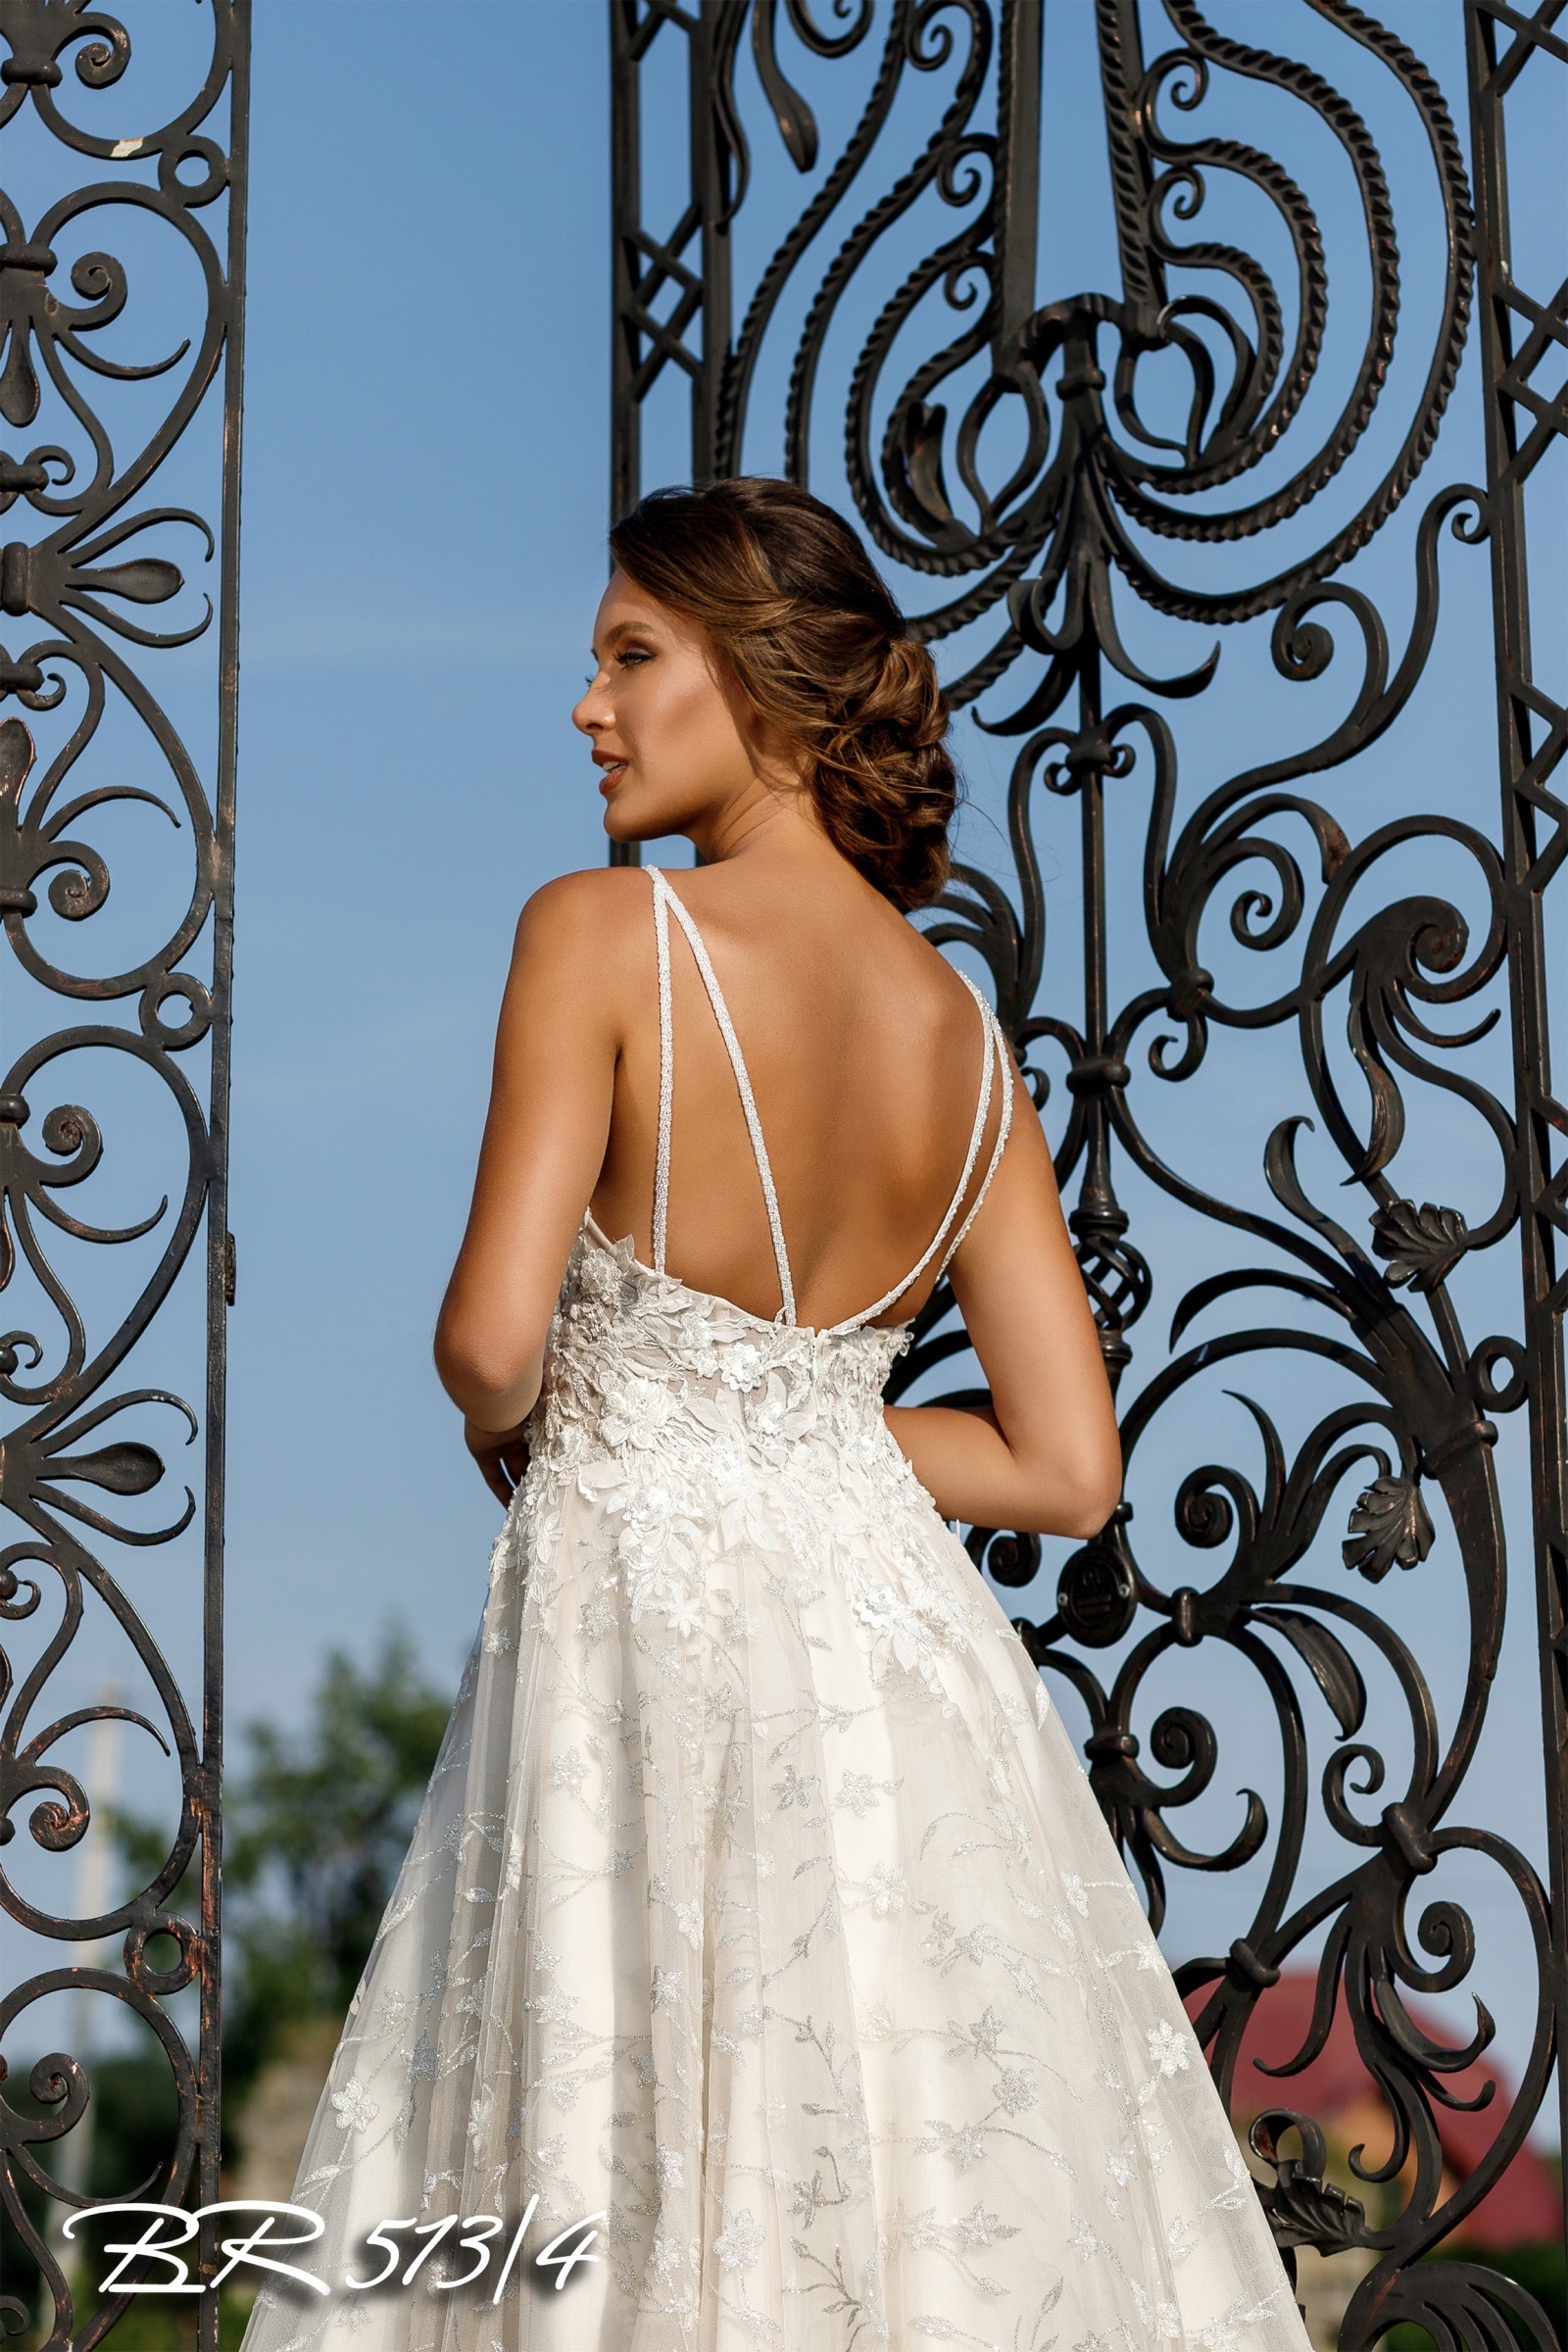 2020 wedding dress A-line v neckline backless spaghetti straps shimmery skirt embroidery lace